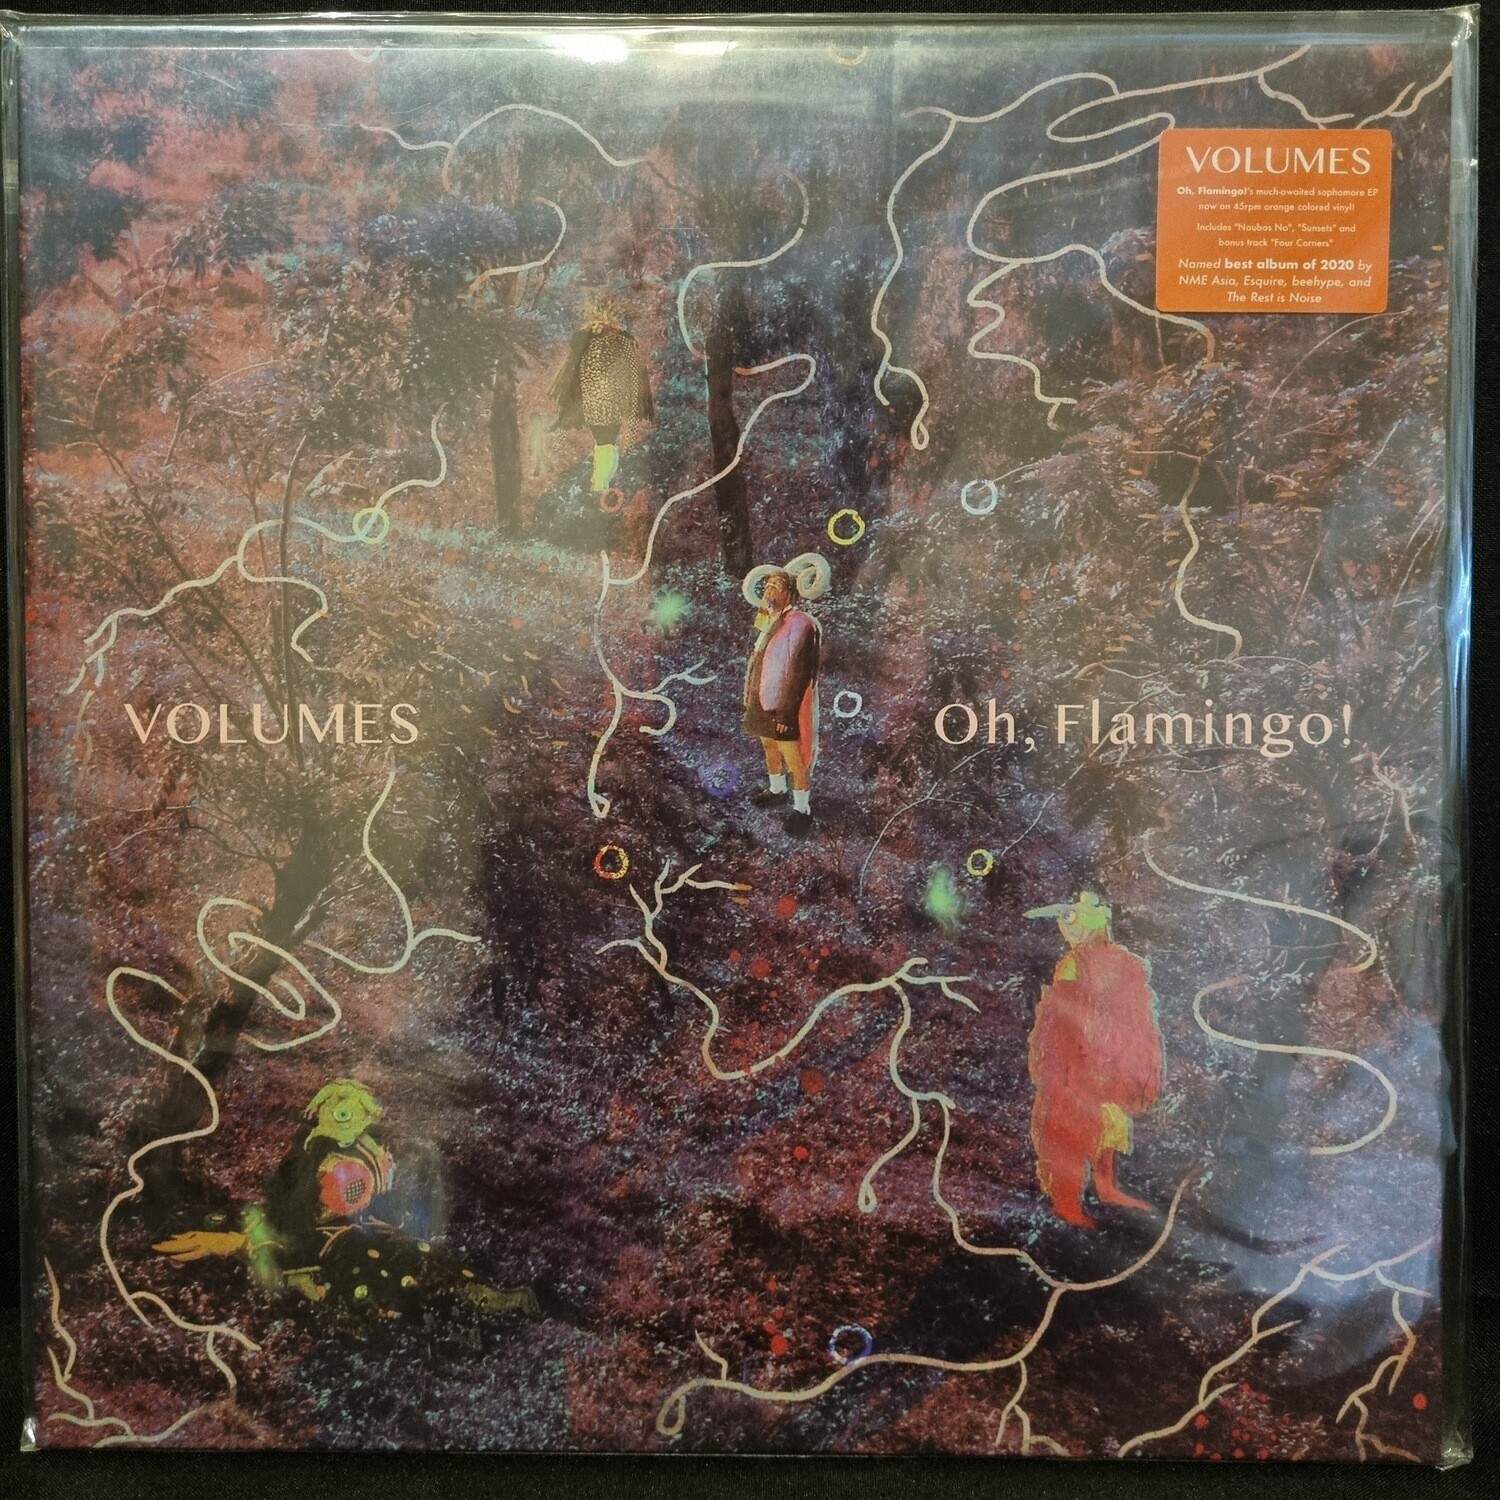 Oh, Flamingo!- Volumes